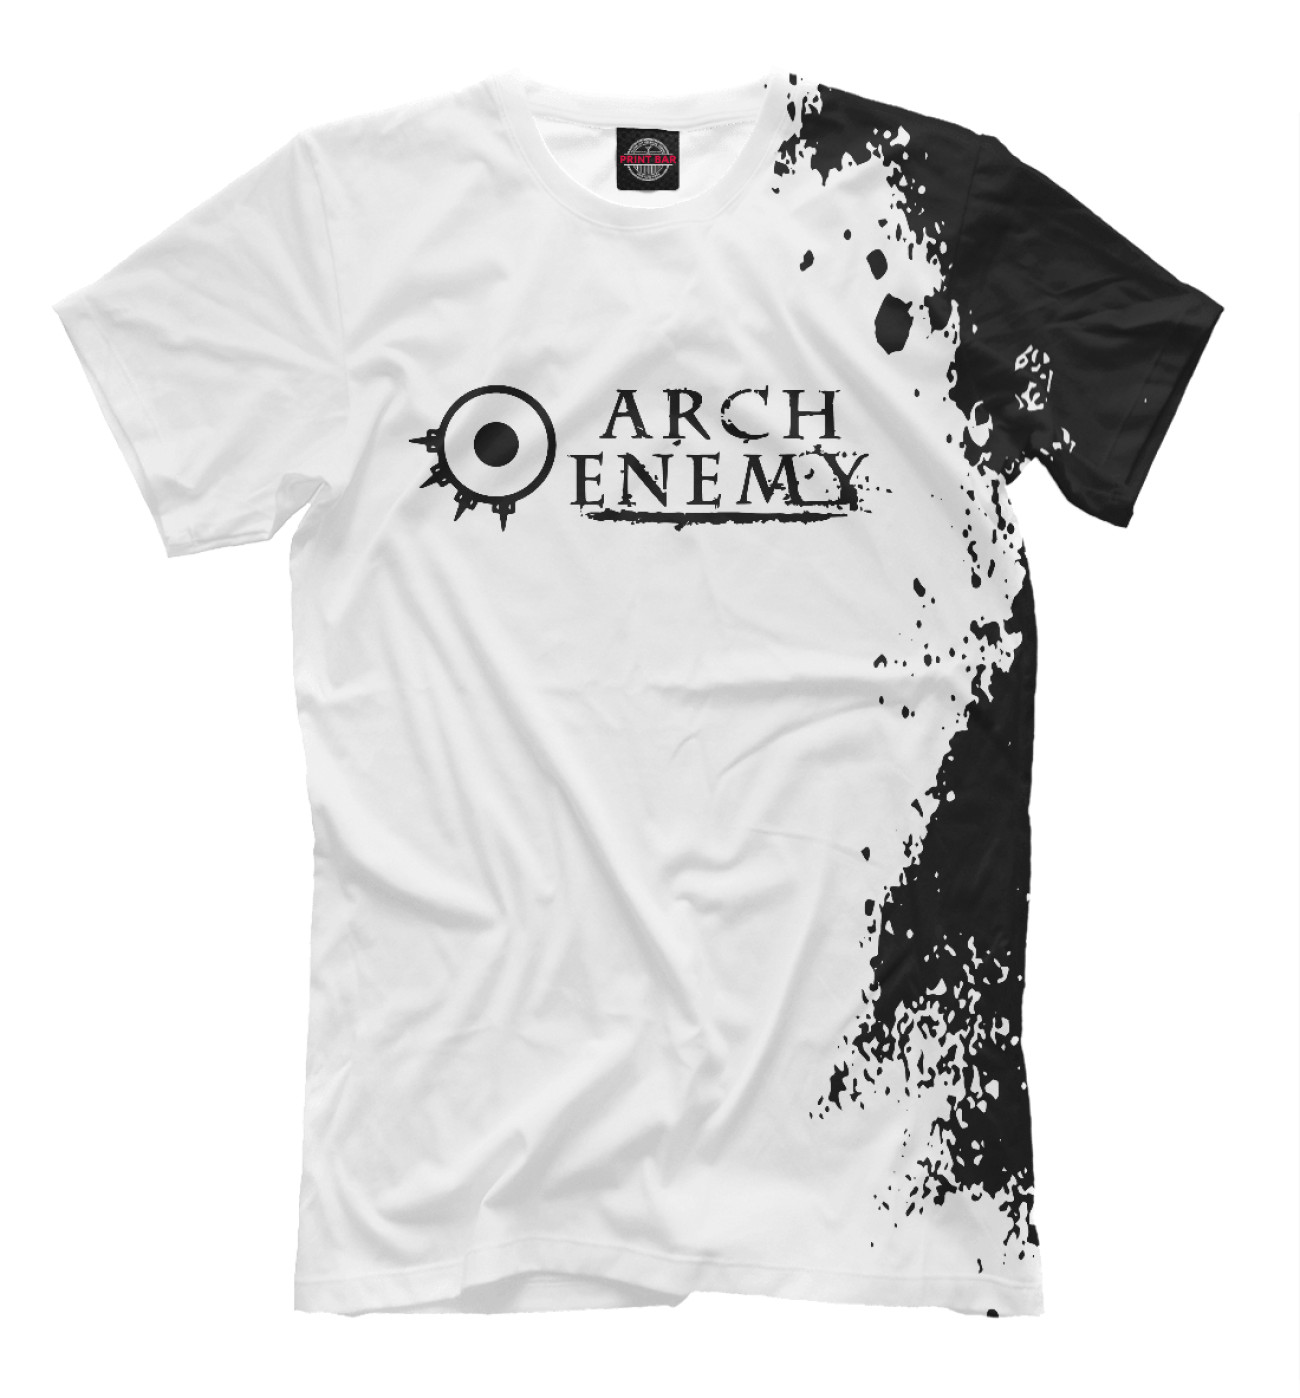 Мужская Футболка Arch Enemy, артикул: AEN-884322-fut-2